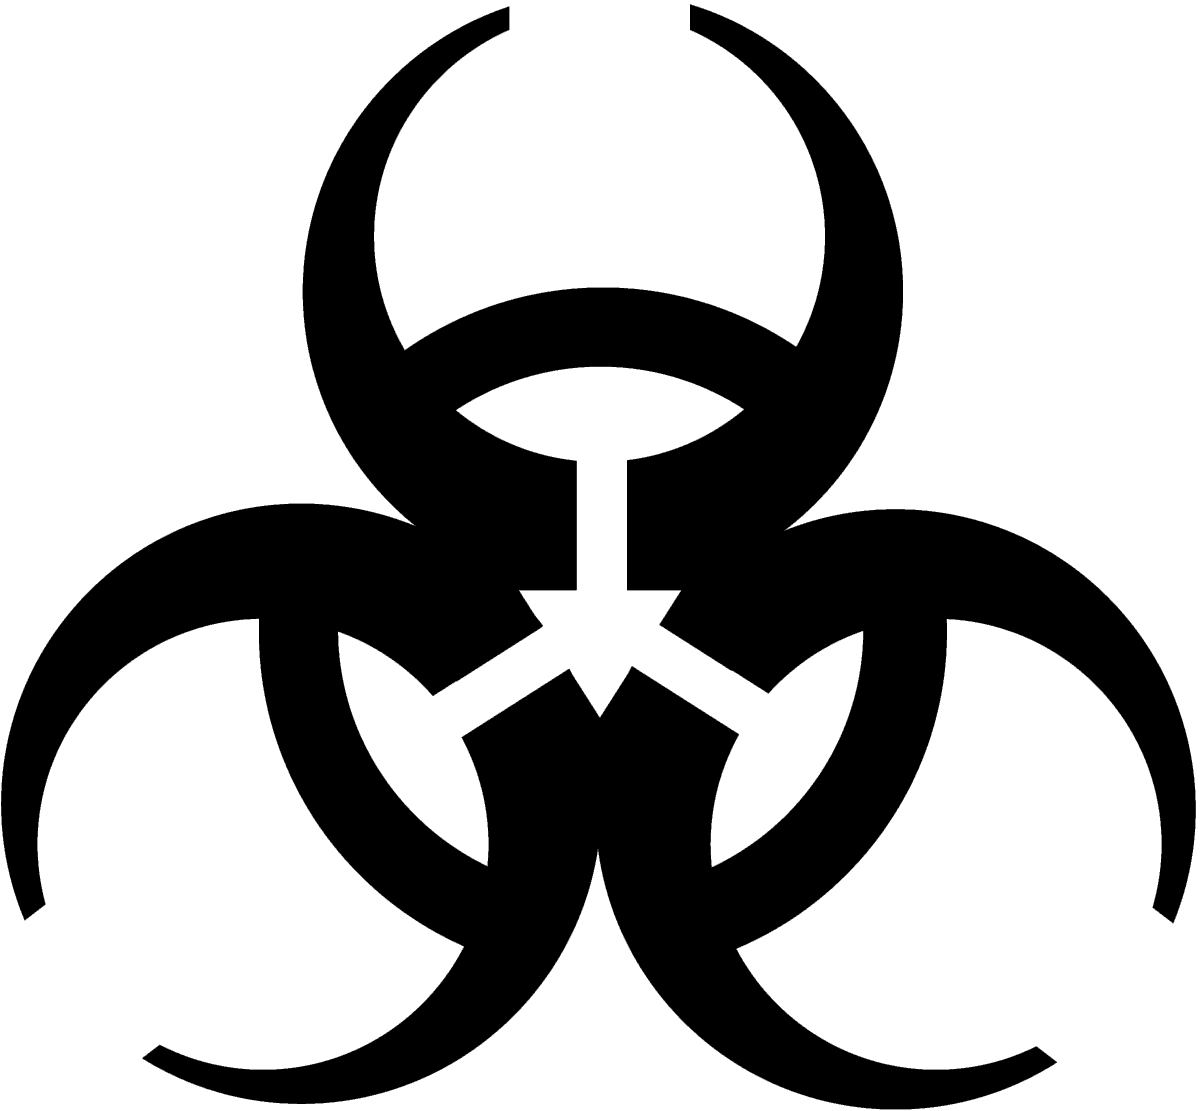 Biohazard Symbol PNG Image in High Definition pngteam.com